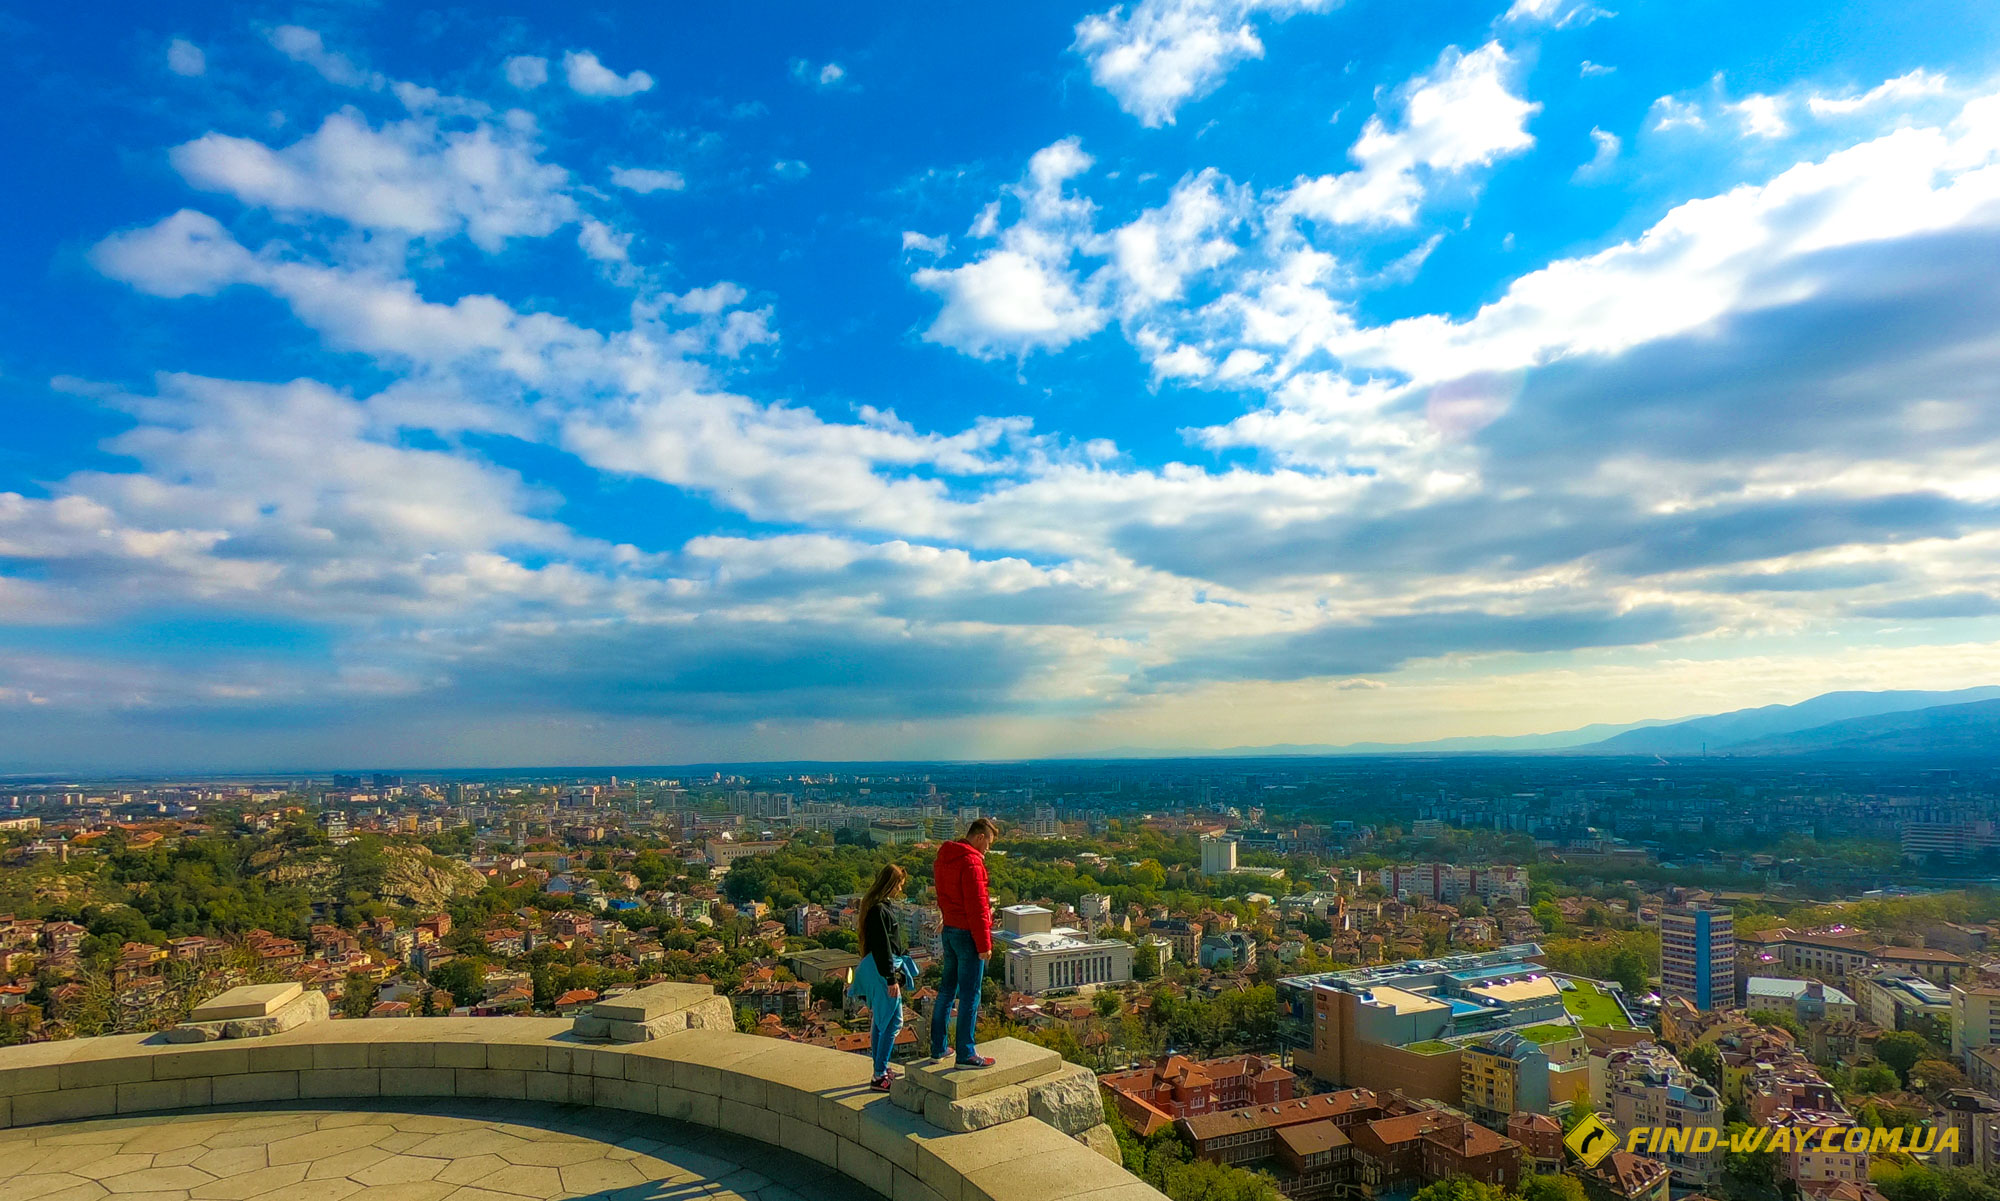 пловдив алешка вид панорама на город советский памятник болгария